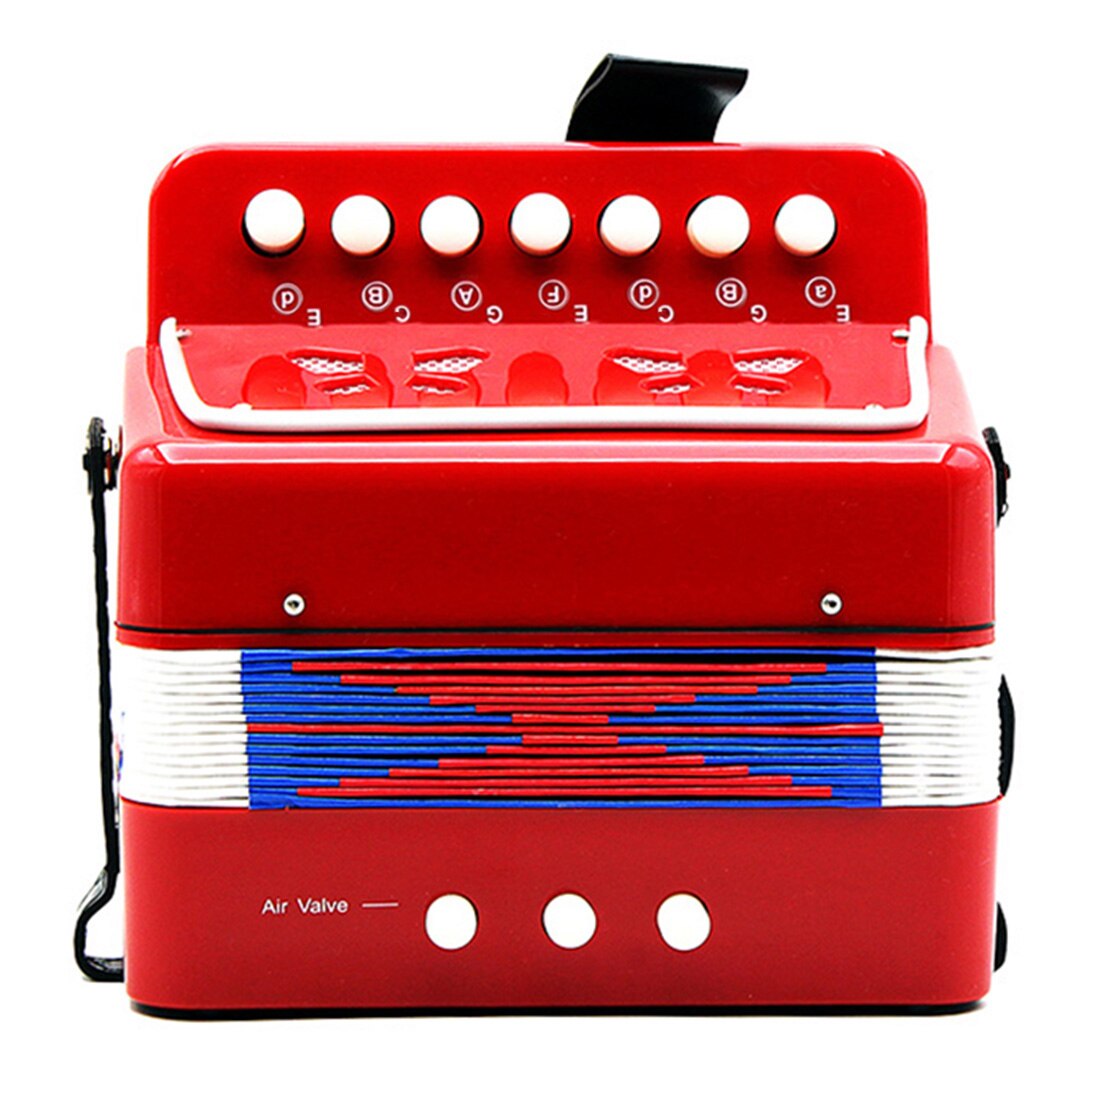 17 nøgle 8 bas børn mini harmonika bærbar abs holdbar harmonika harmonisk uddannelsesmæssigt keyboardinstrument til begyndere: Rød